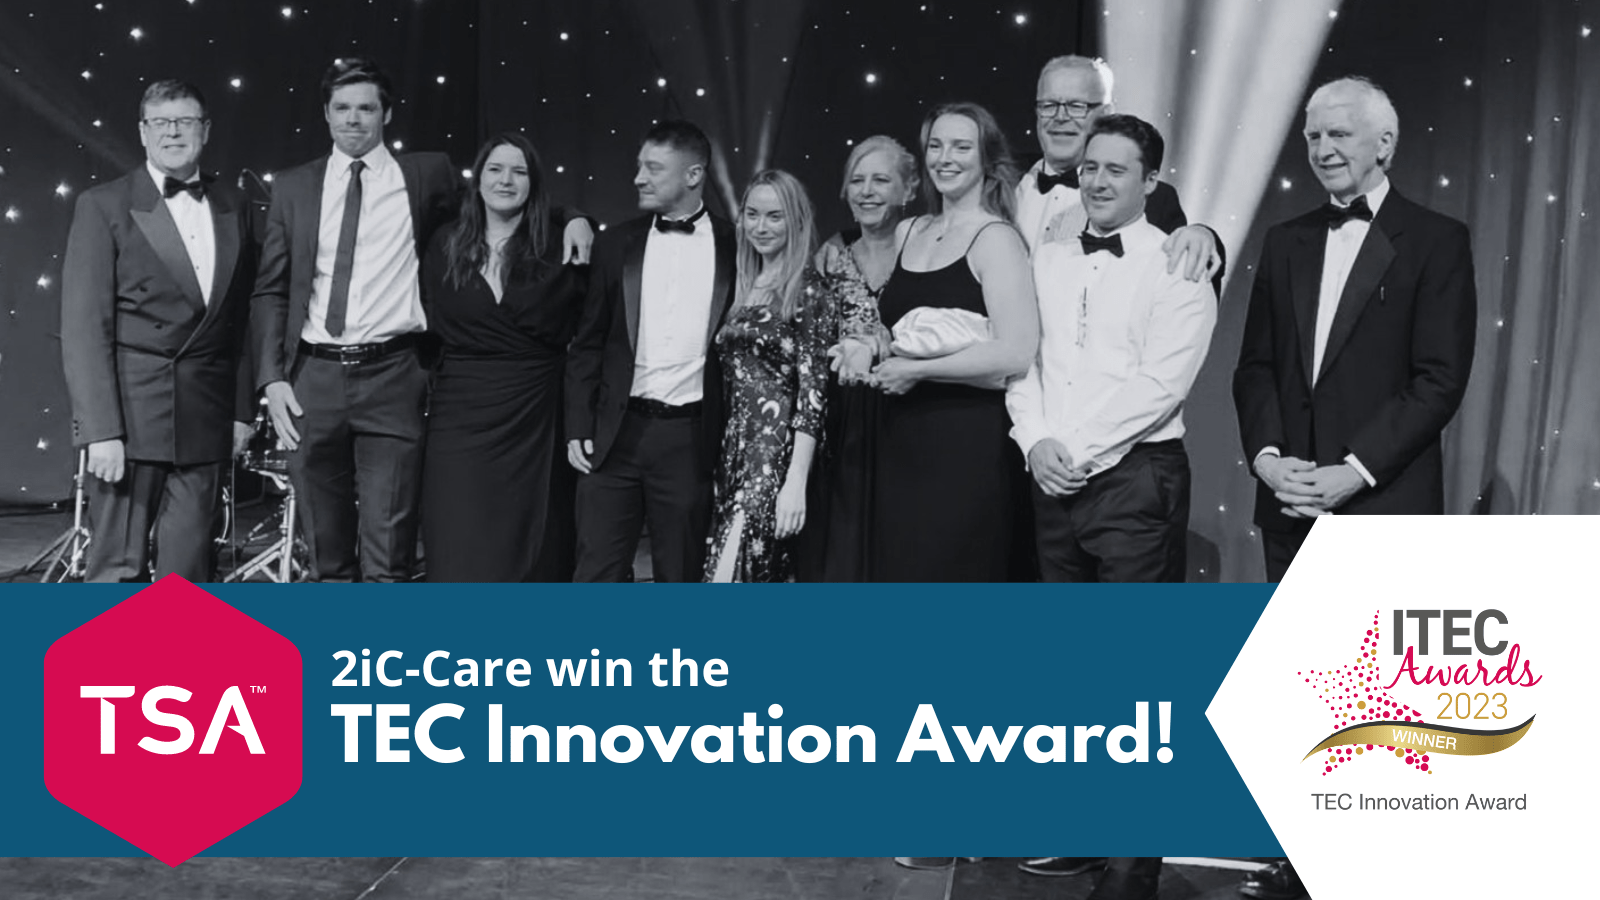 2iC-Care Win the TEC Innovation Award at ITEC 2023!